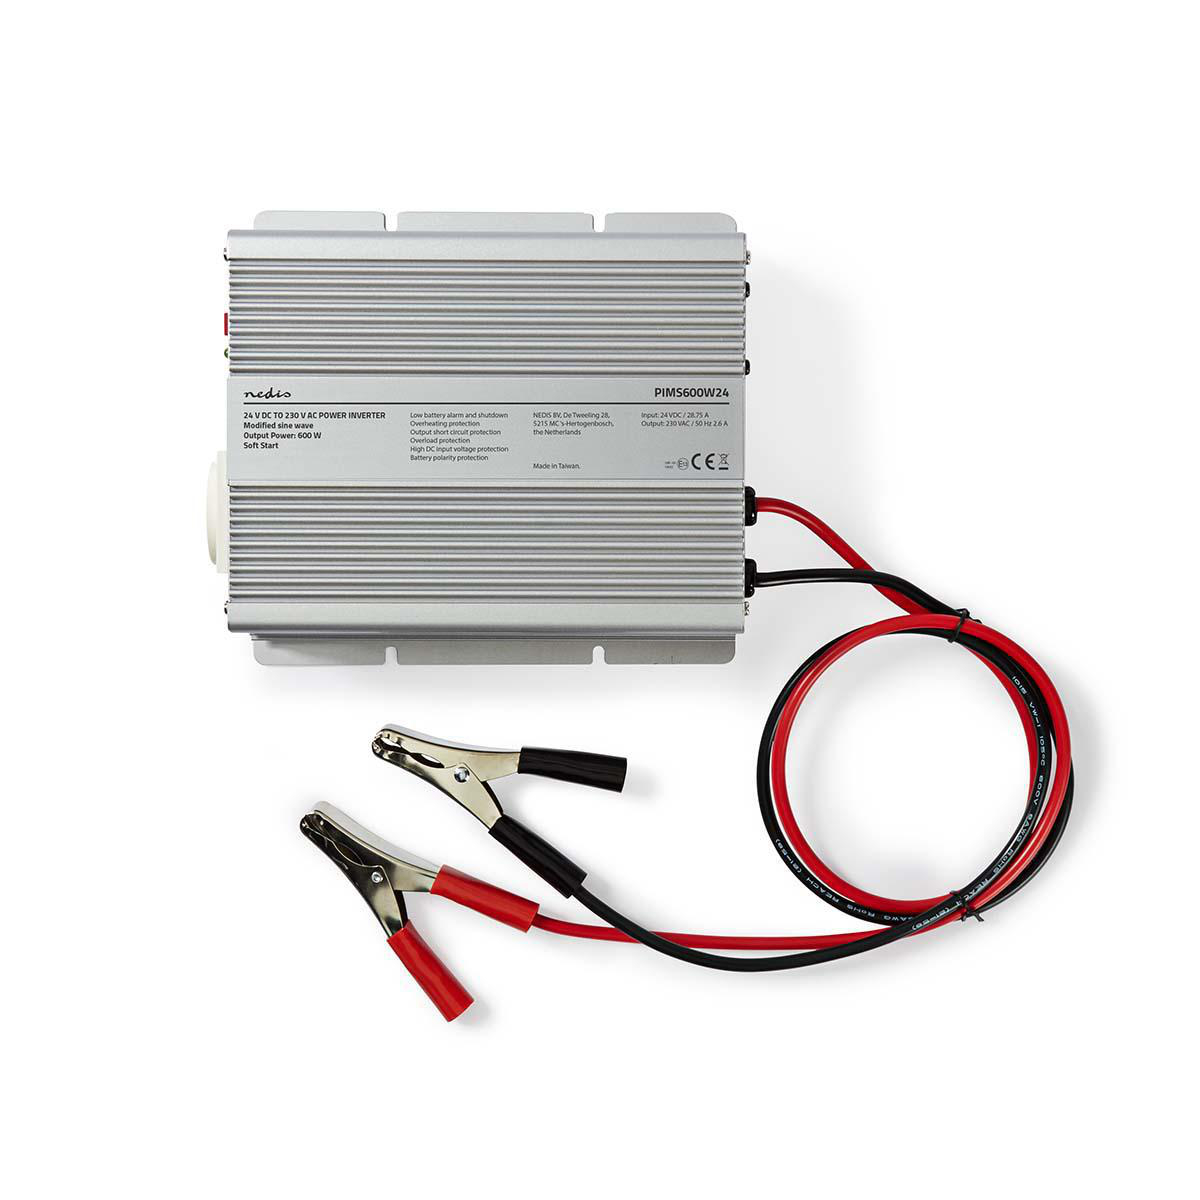 PIMS600W24 NEDIS Power Inverter